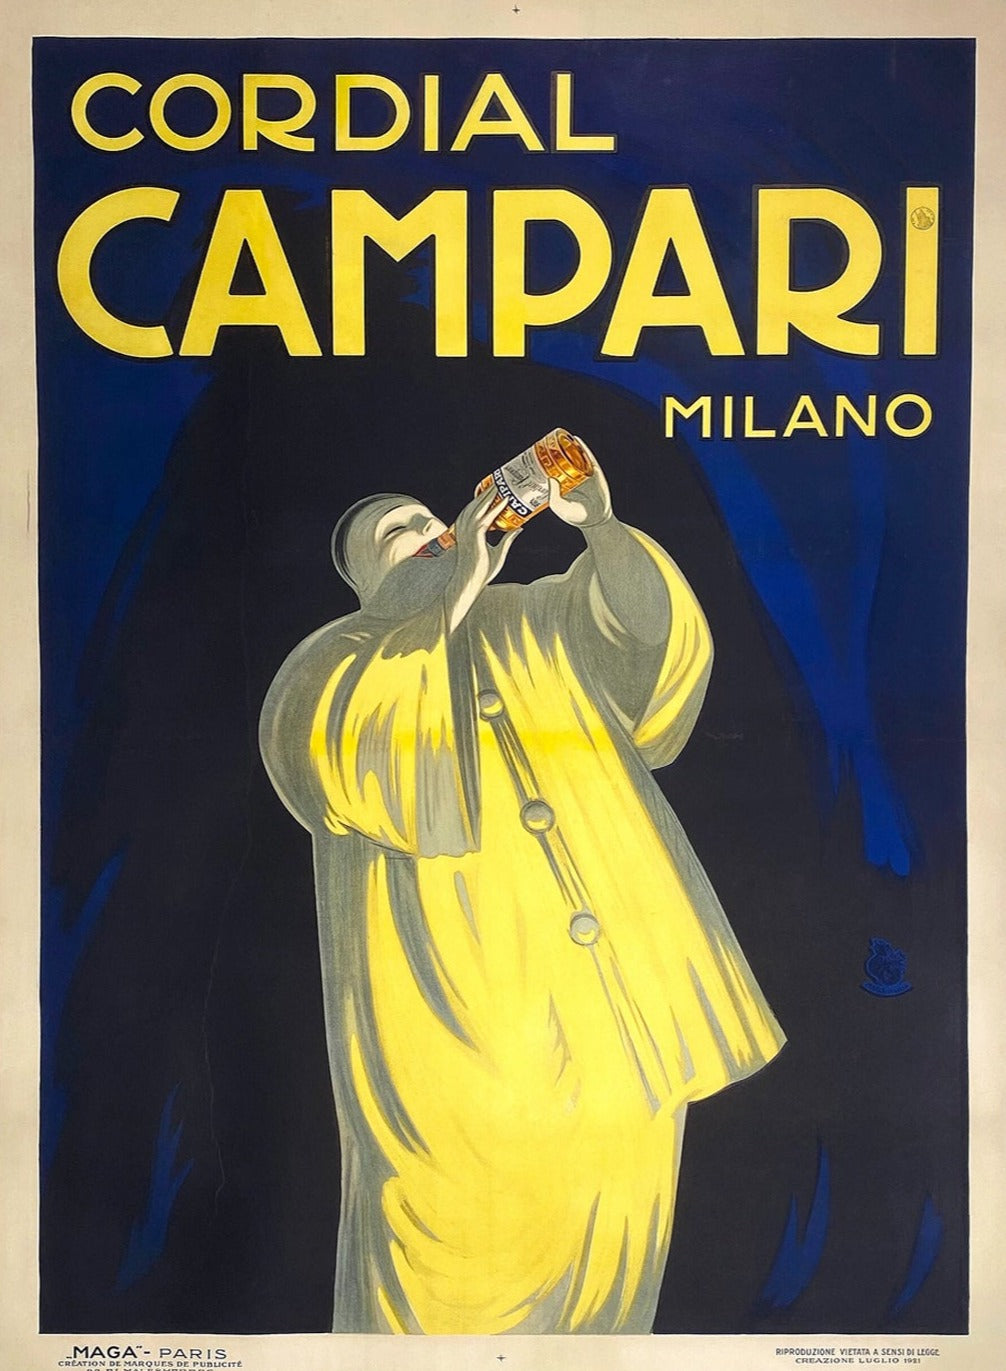 Campari - Cordial Campari Milano